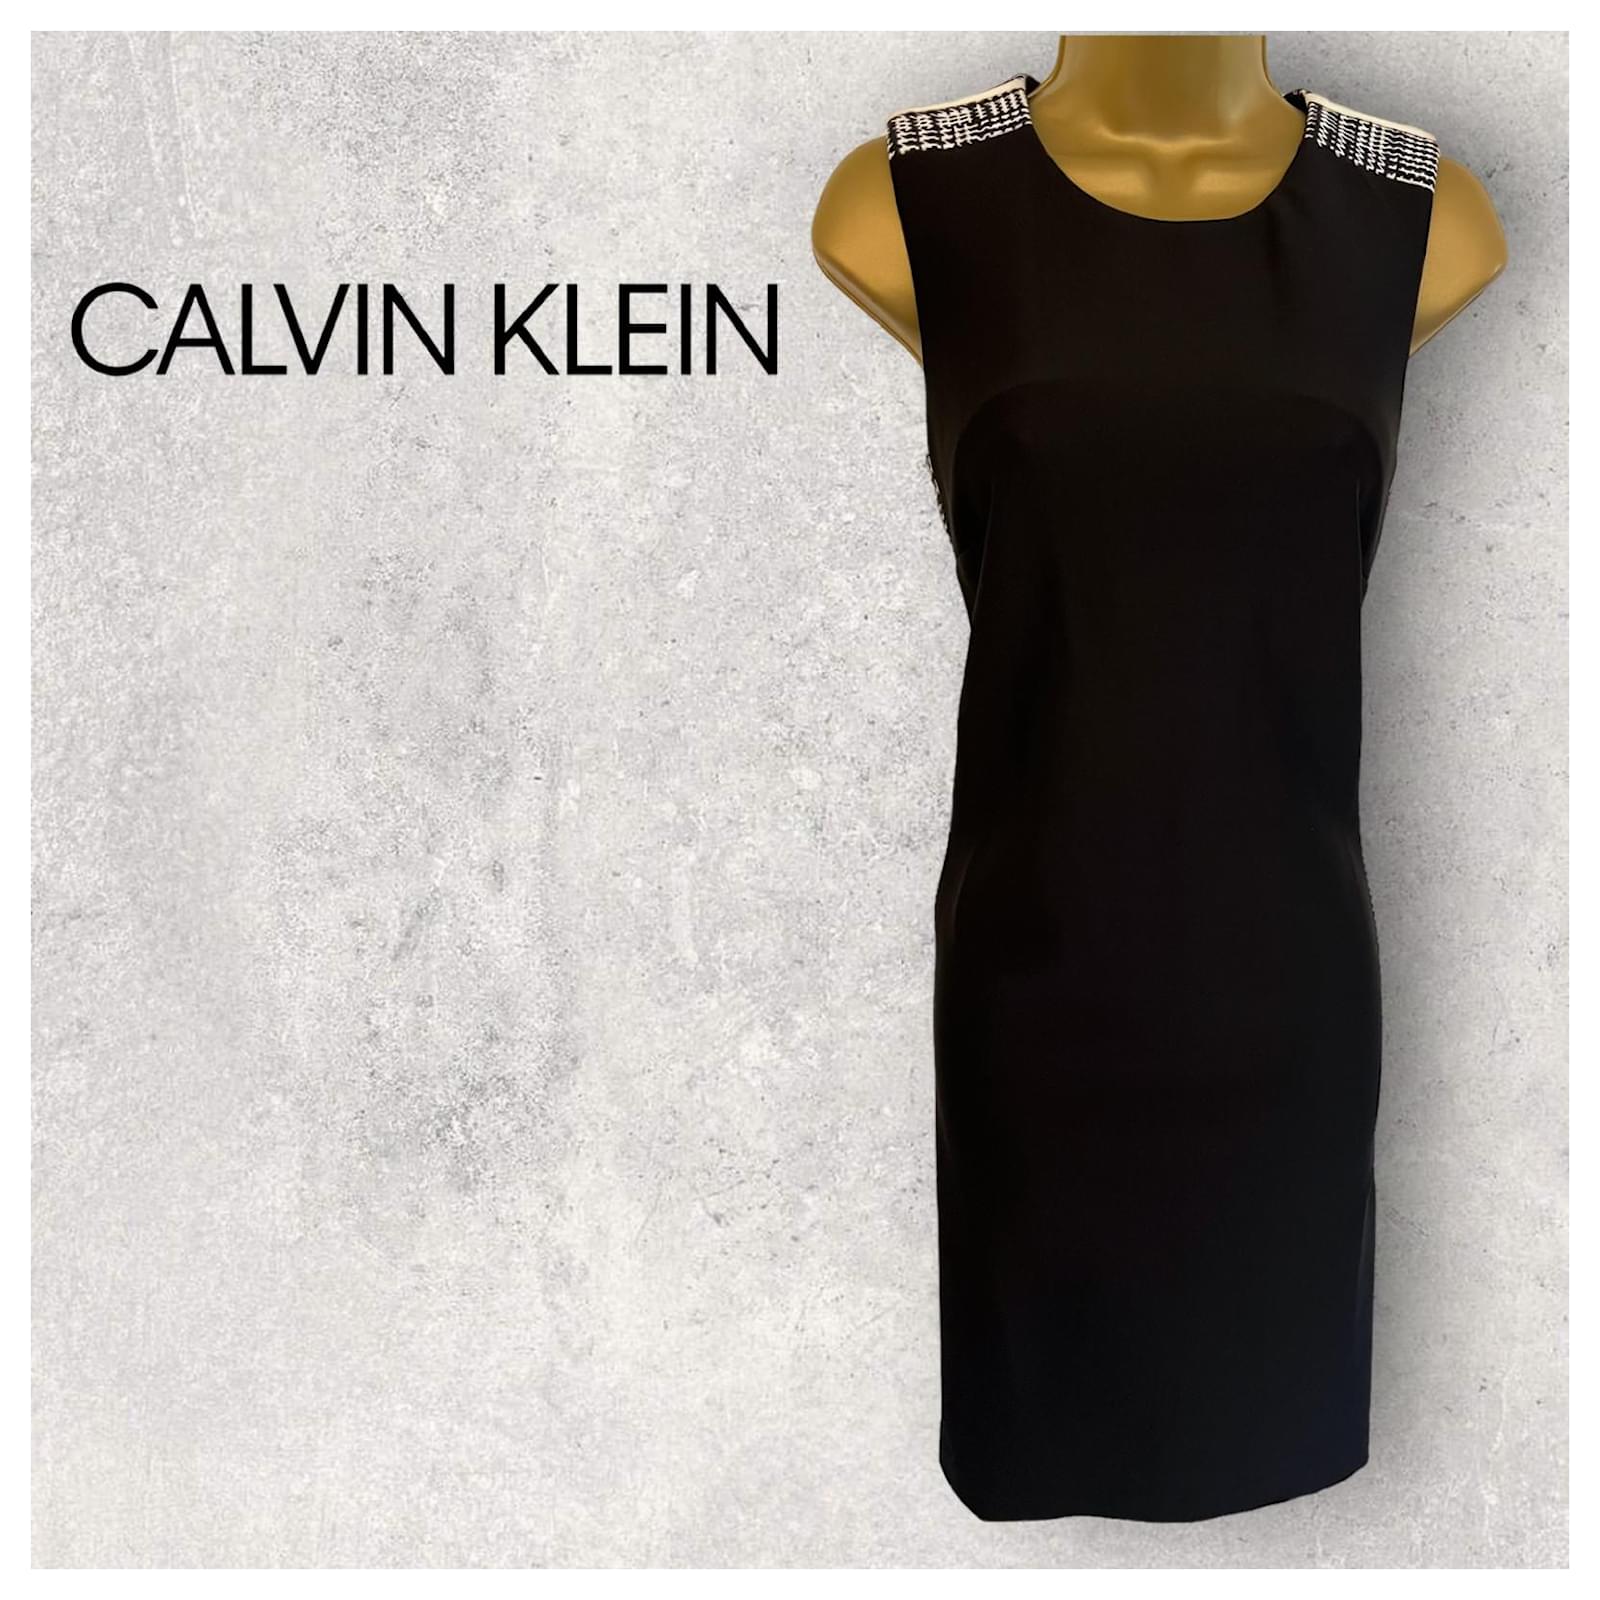 Calvin Klein Schwarz Weiß Ärmelloses, figurbetontes 8 Strahl EU Joli US UK - Closet Elasthan Stretchkleid 40 ref.972057 12 Polyester